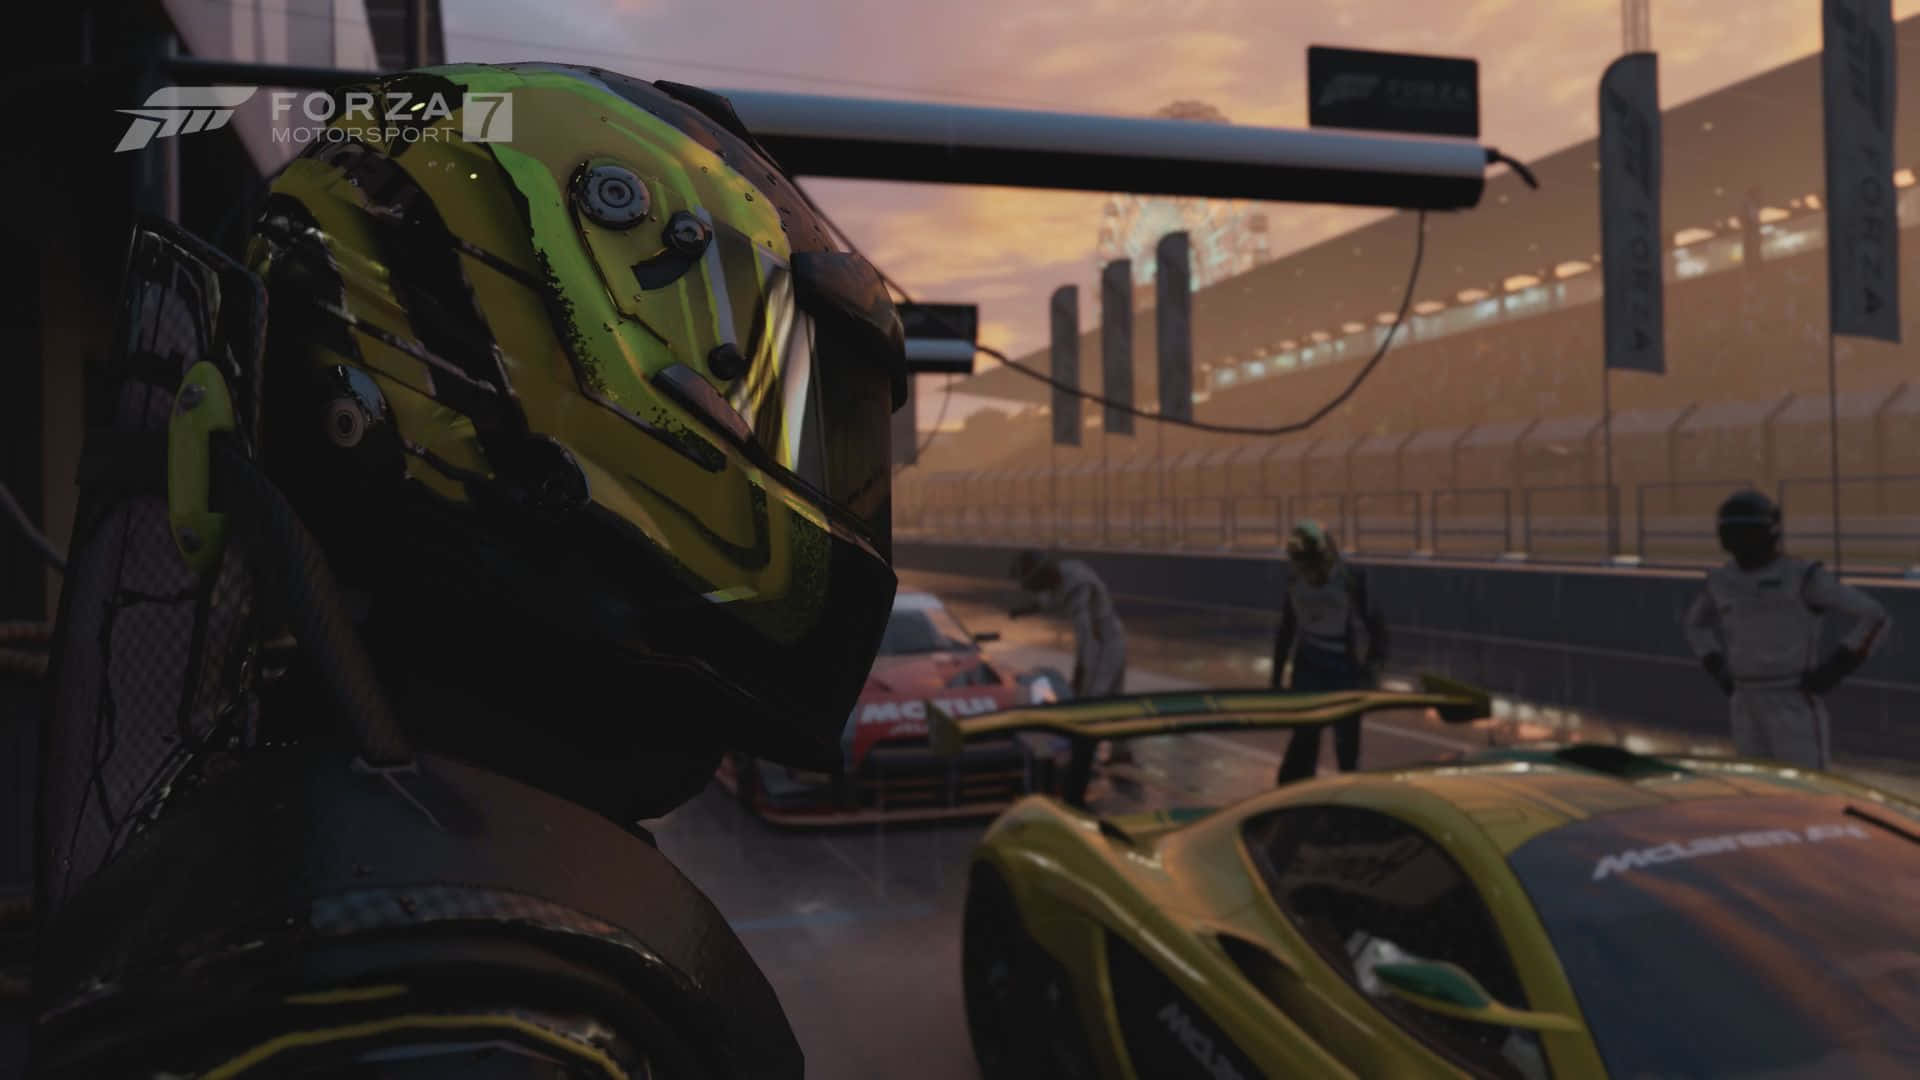 Hd Forza Motorsport 7 Background Military-like Helmet